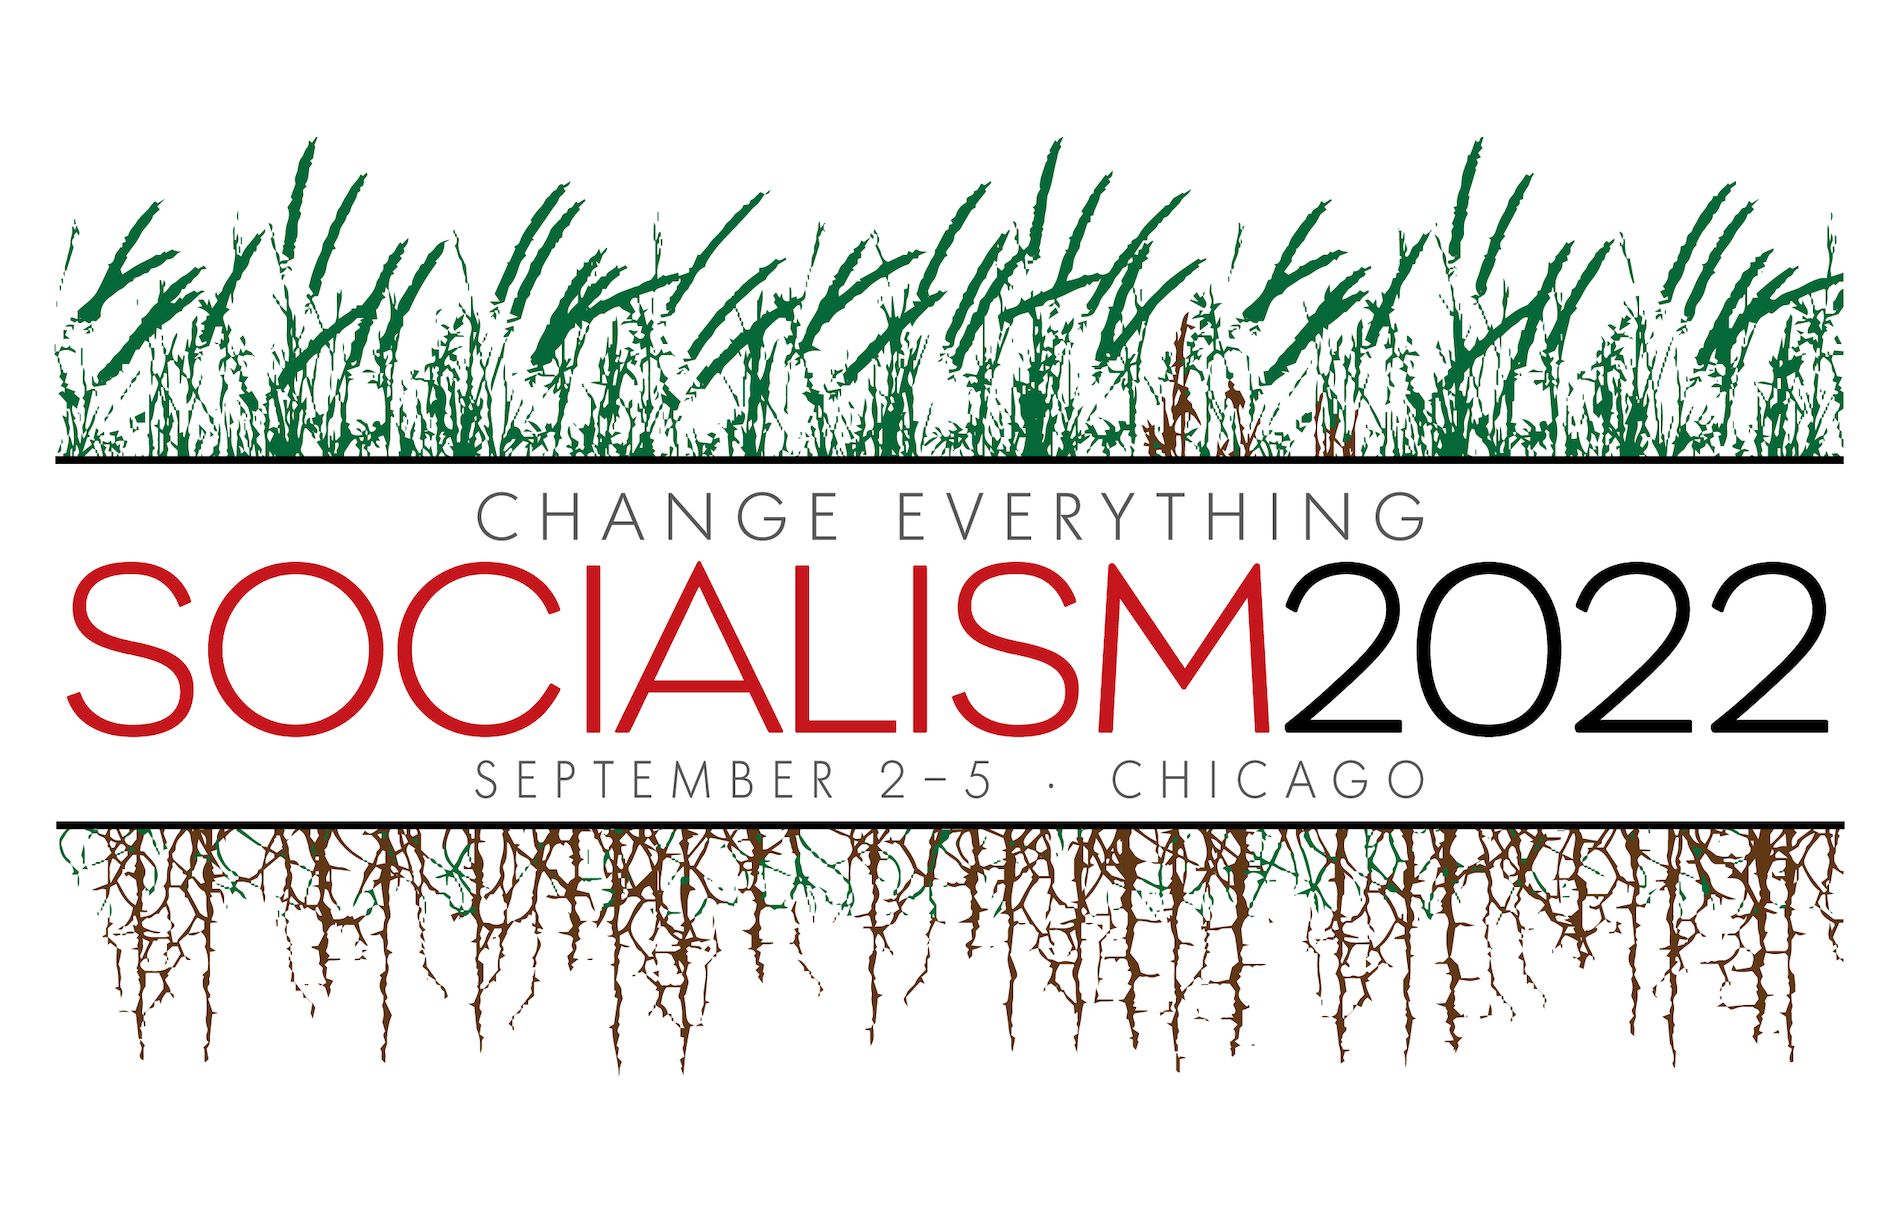 Socialism 2022: September 2-5, Chicago